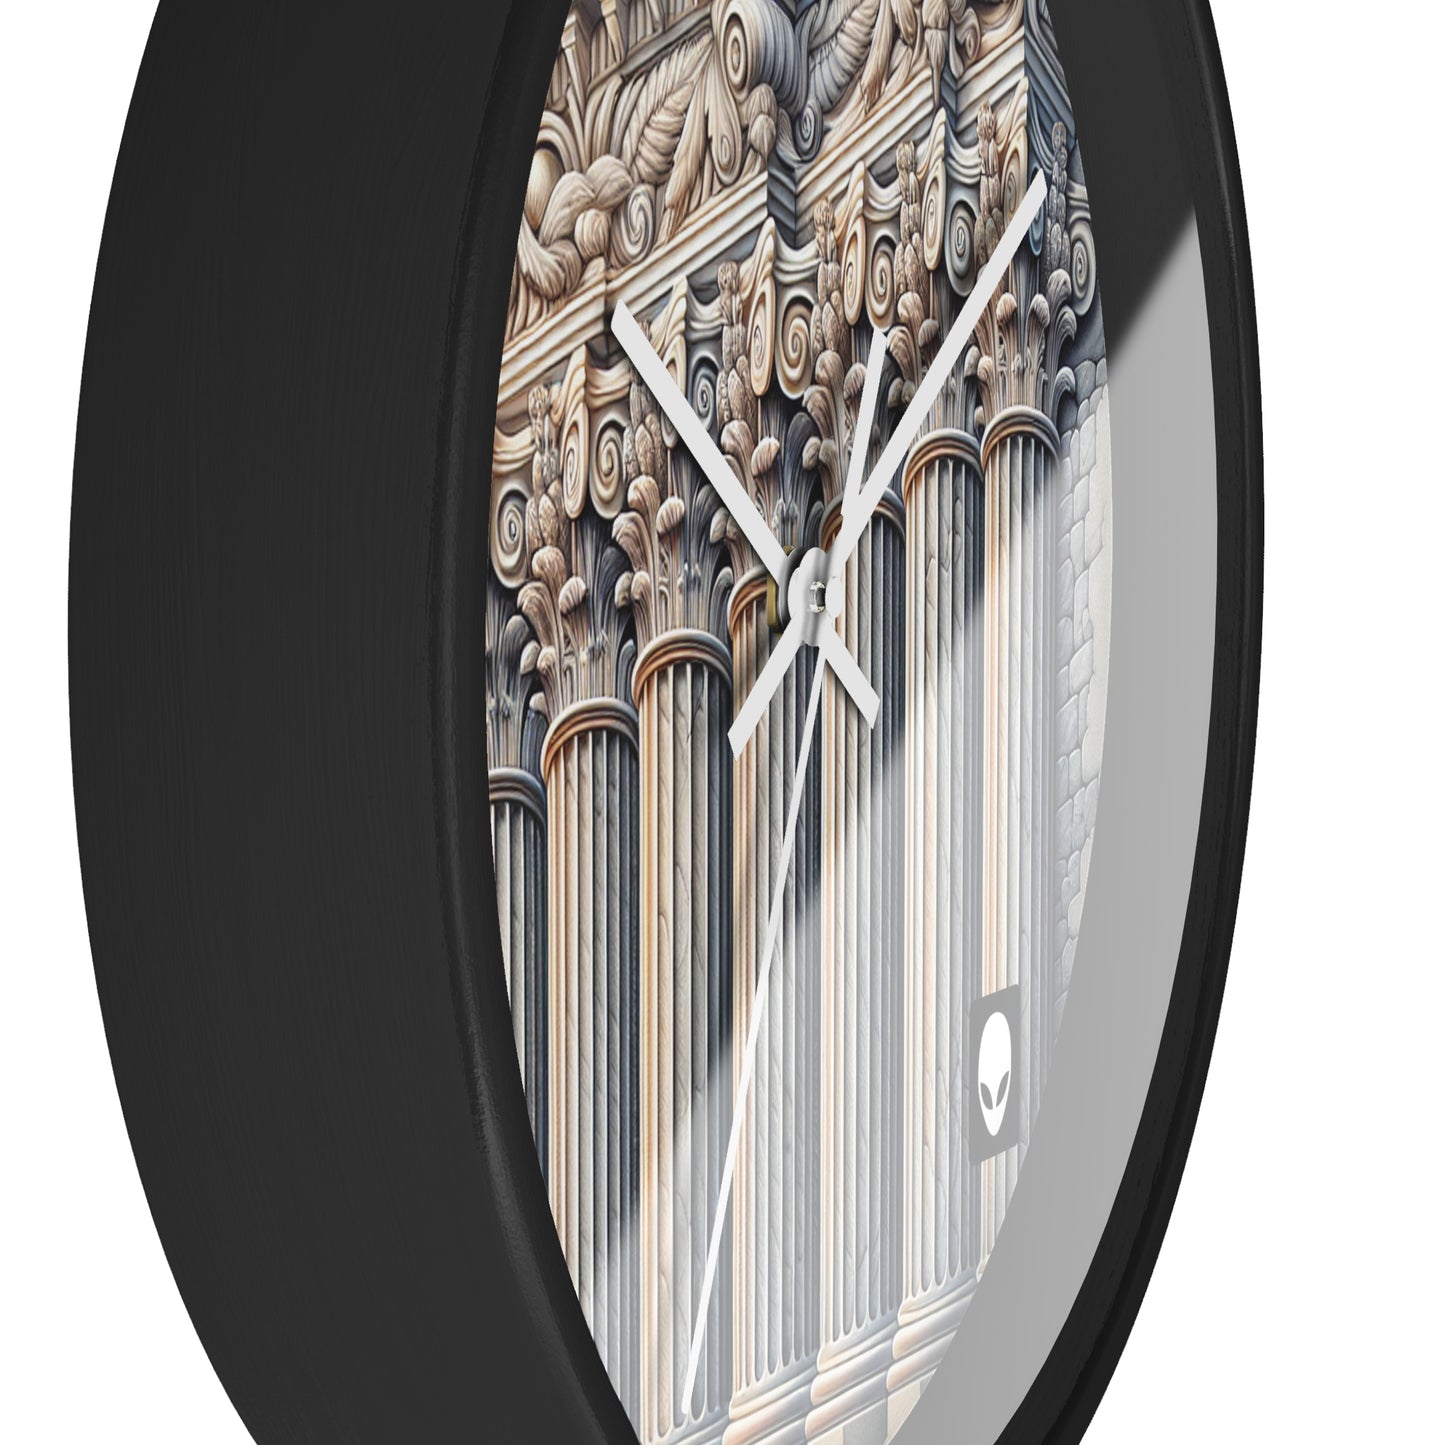 "3D Wall Columns: An Architectural Artpiece" - The Alien Wall Clock Trompe-l'oeil Style